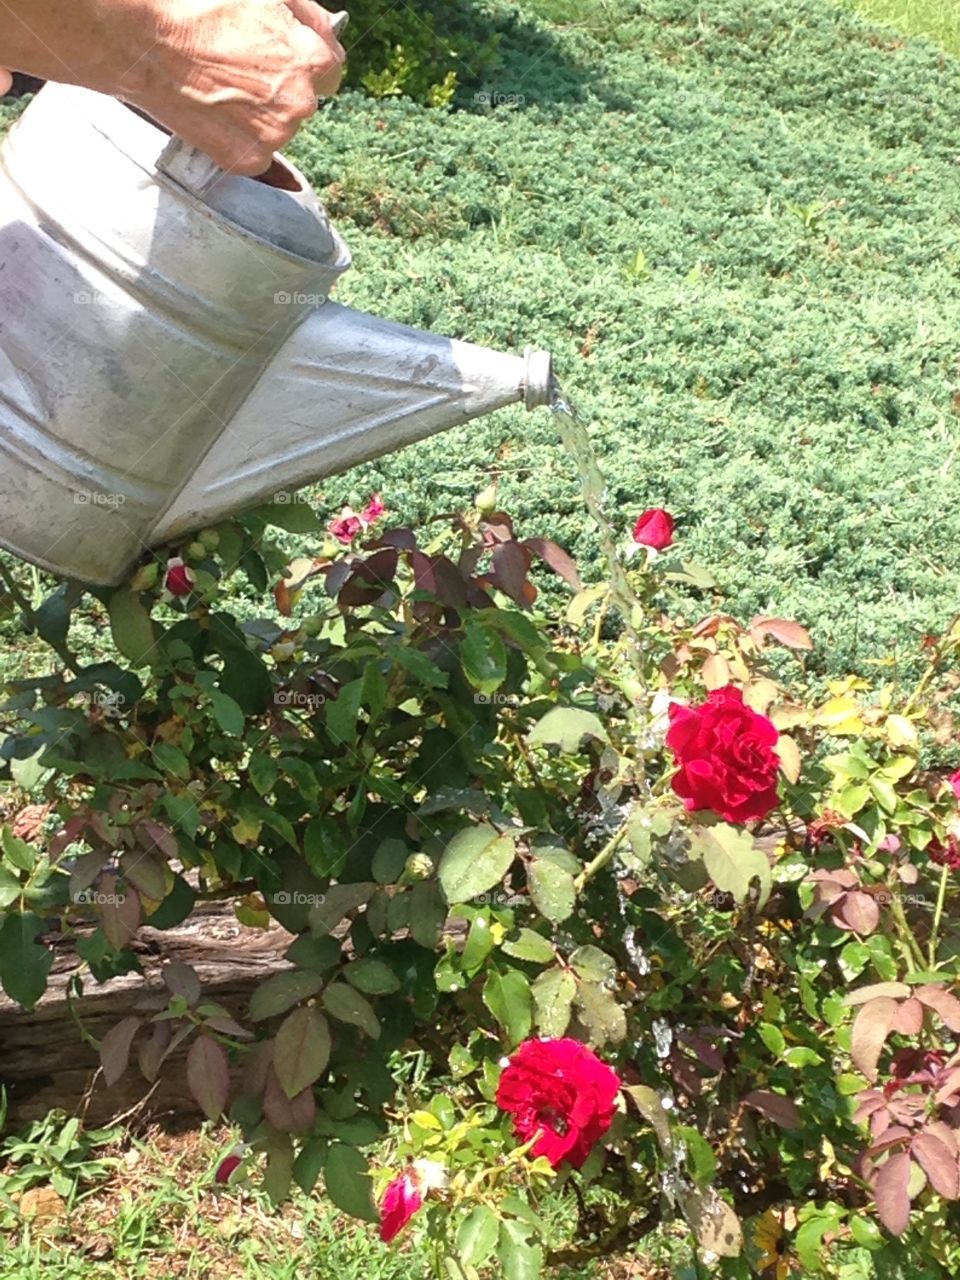 Watering roses